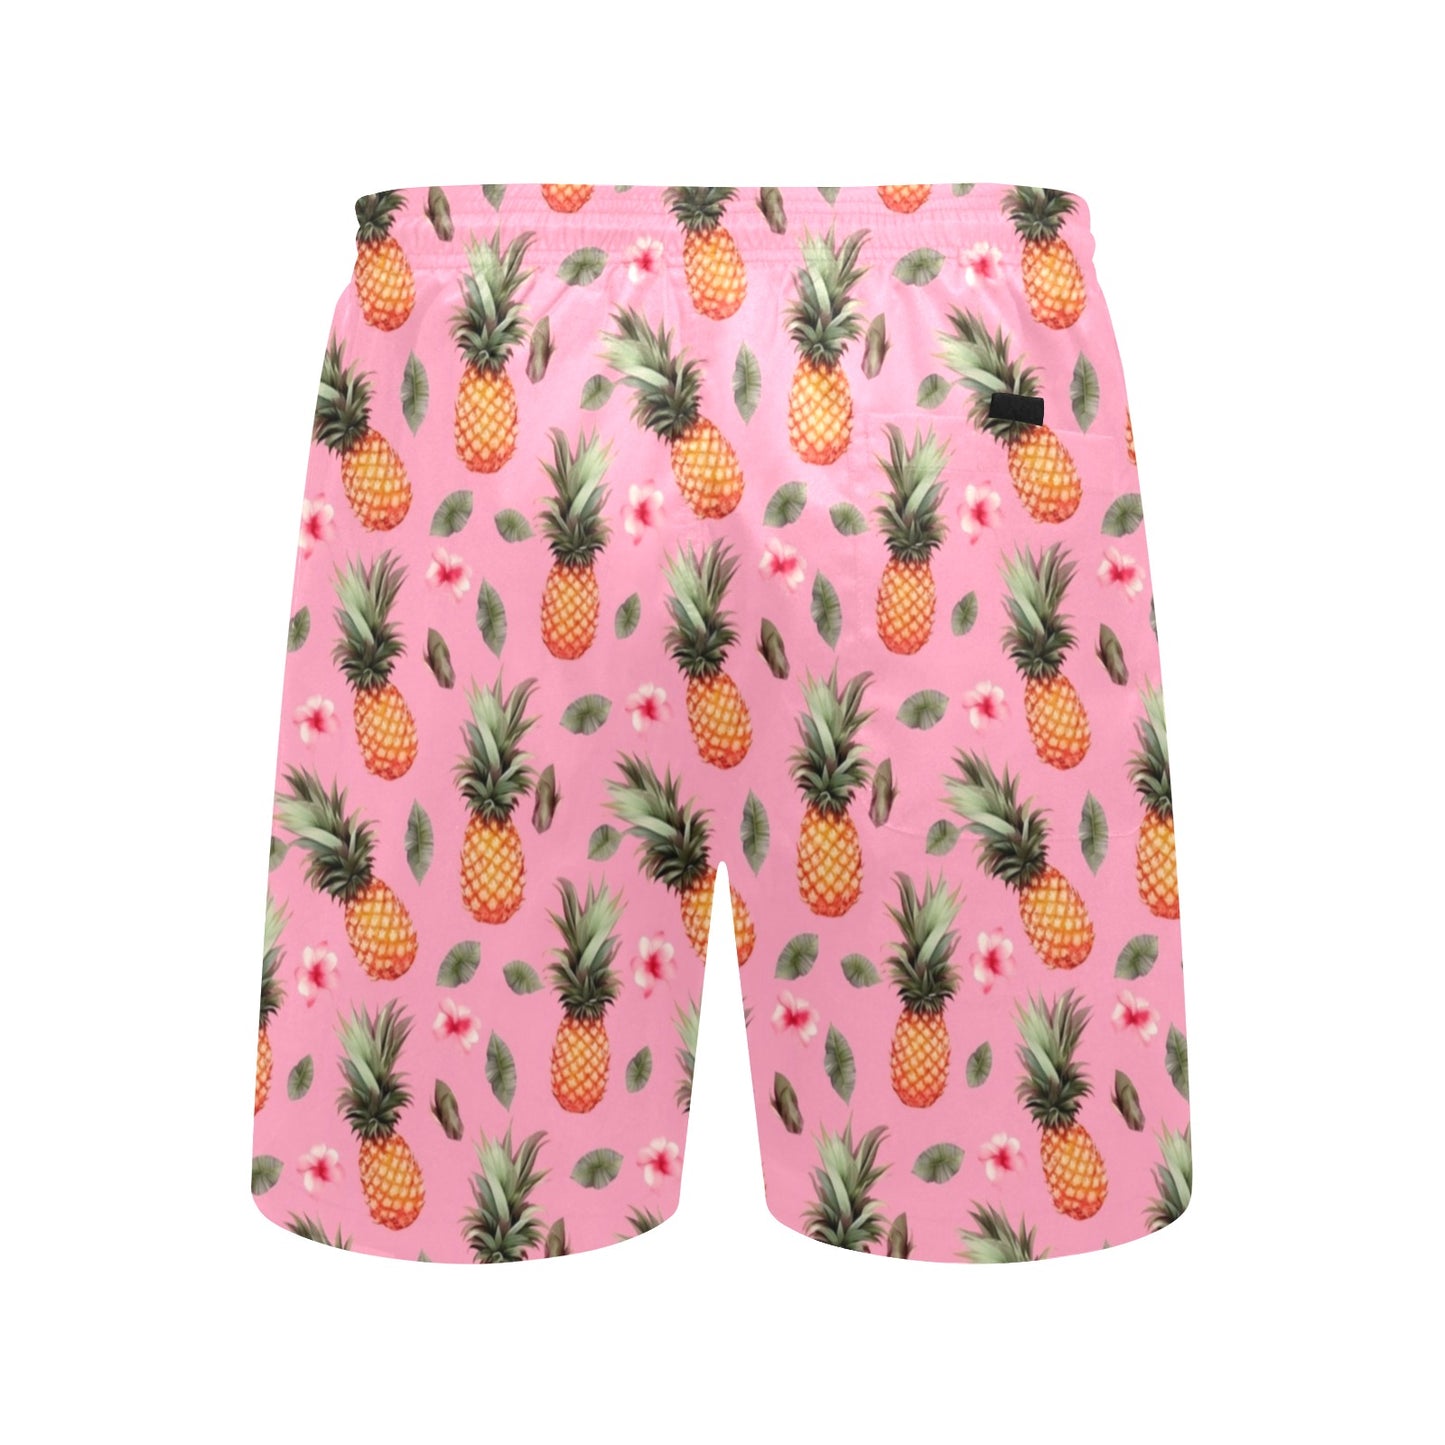 Pink Pineapple Men Swim Trunks, Tropical Mid Length Shorts Beach Surf Swimwear Front Back Pockets Mesh Lining Drawstring Bathing Suit Starcove Fashion